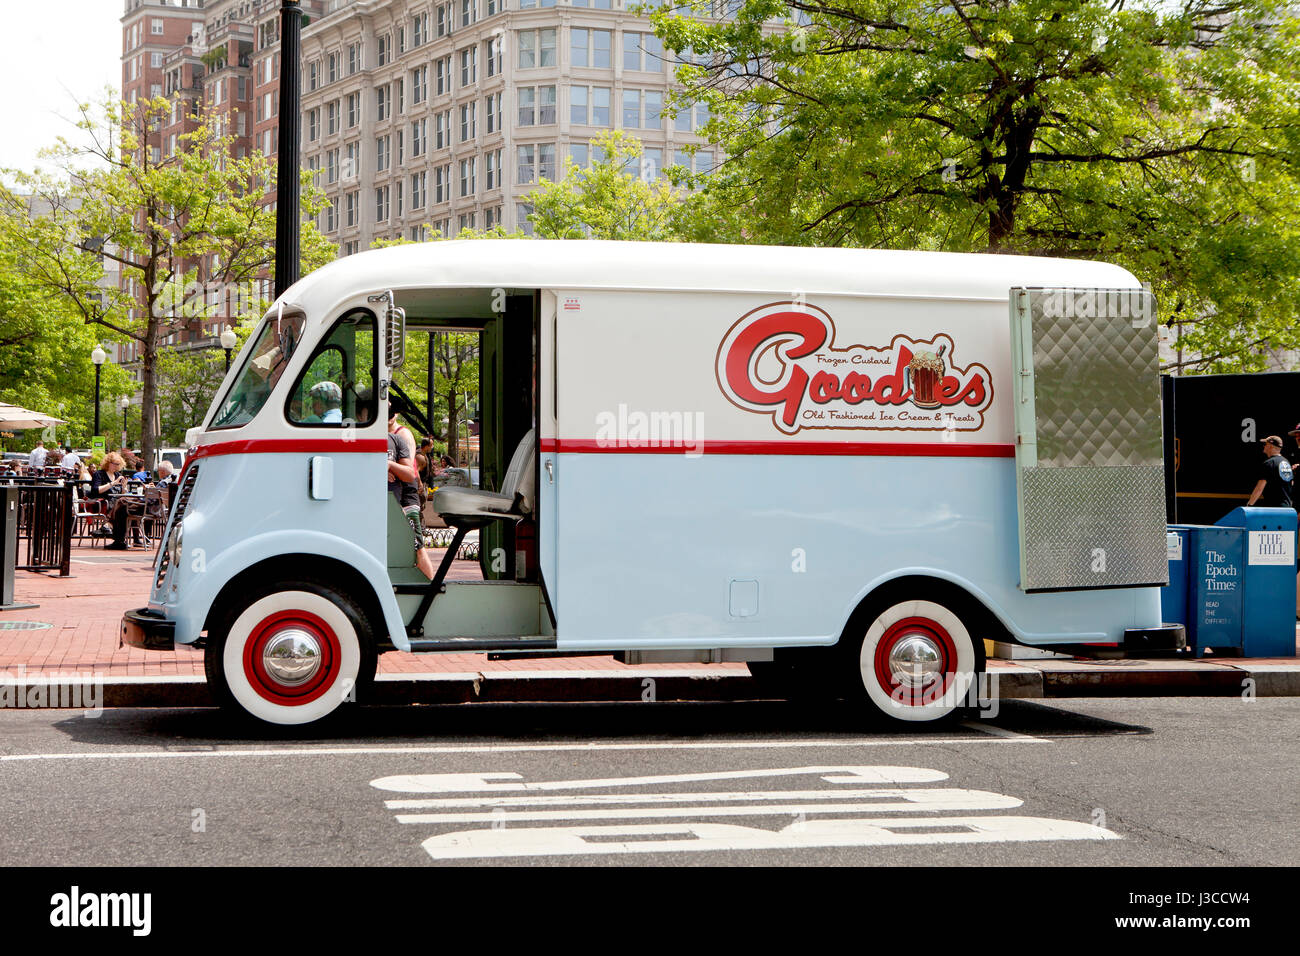 old fashioned ice cream van